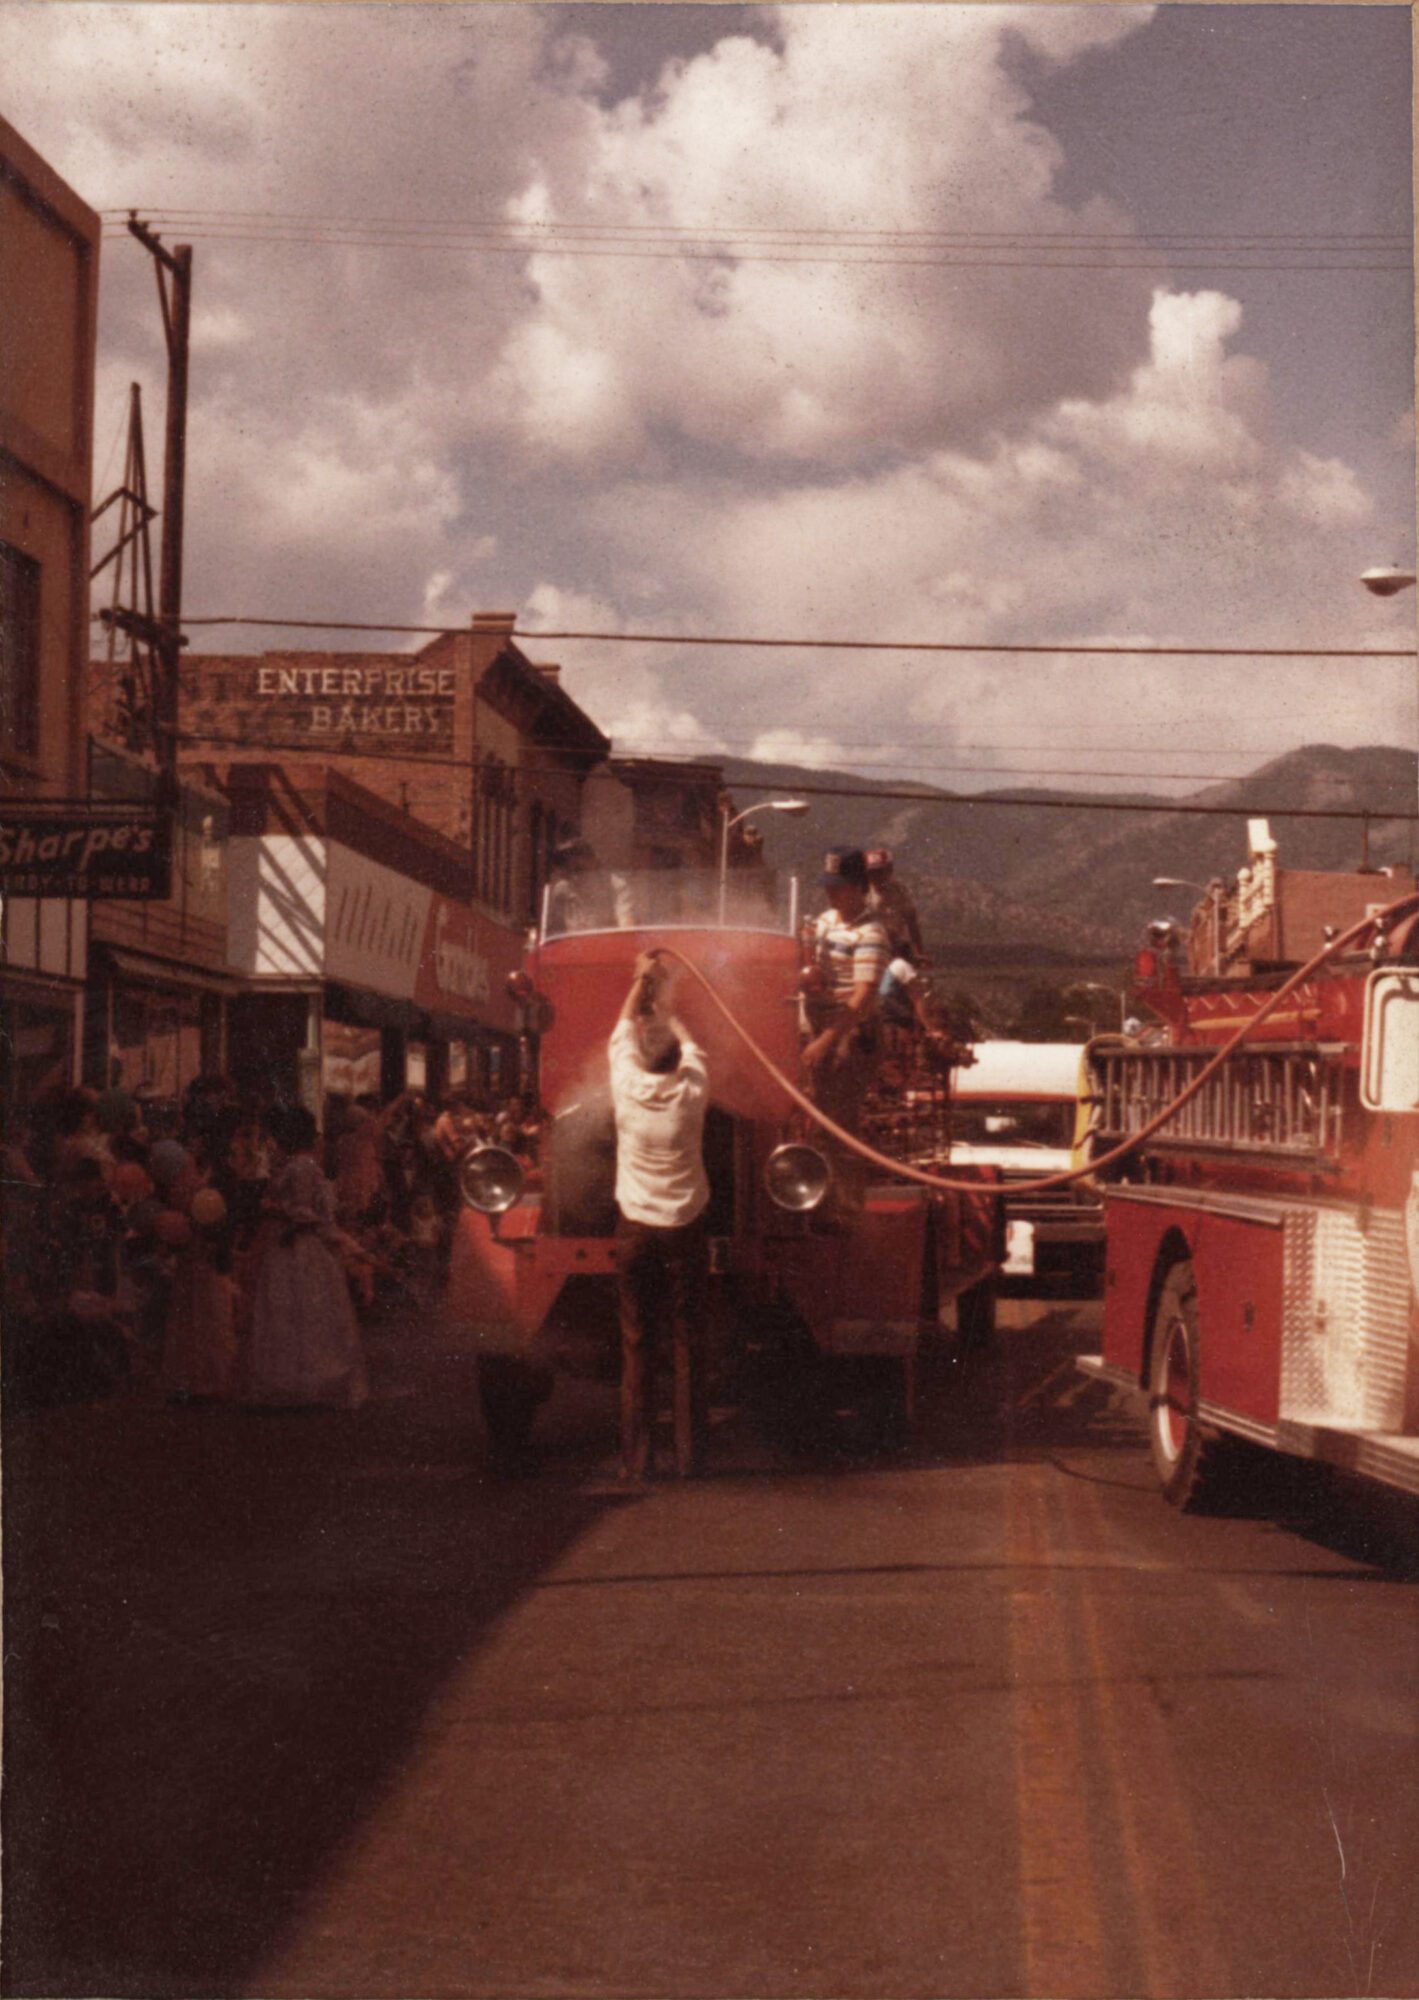 Putting Fire Truck fire out at Salida’s Centennial Parade July 1980